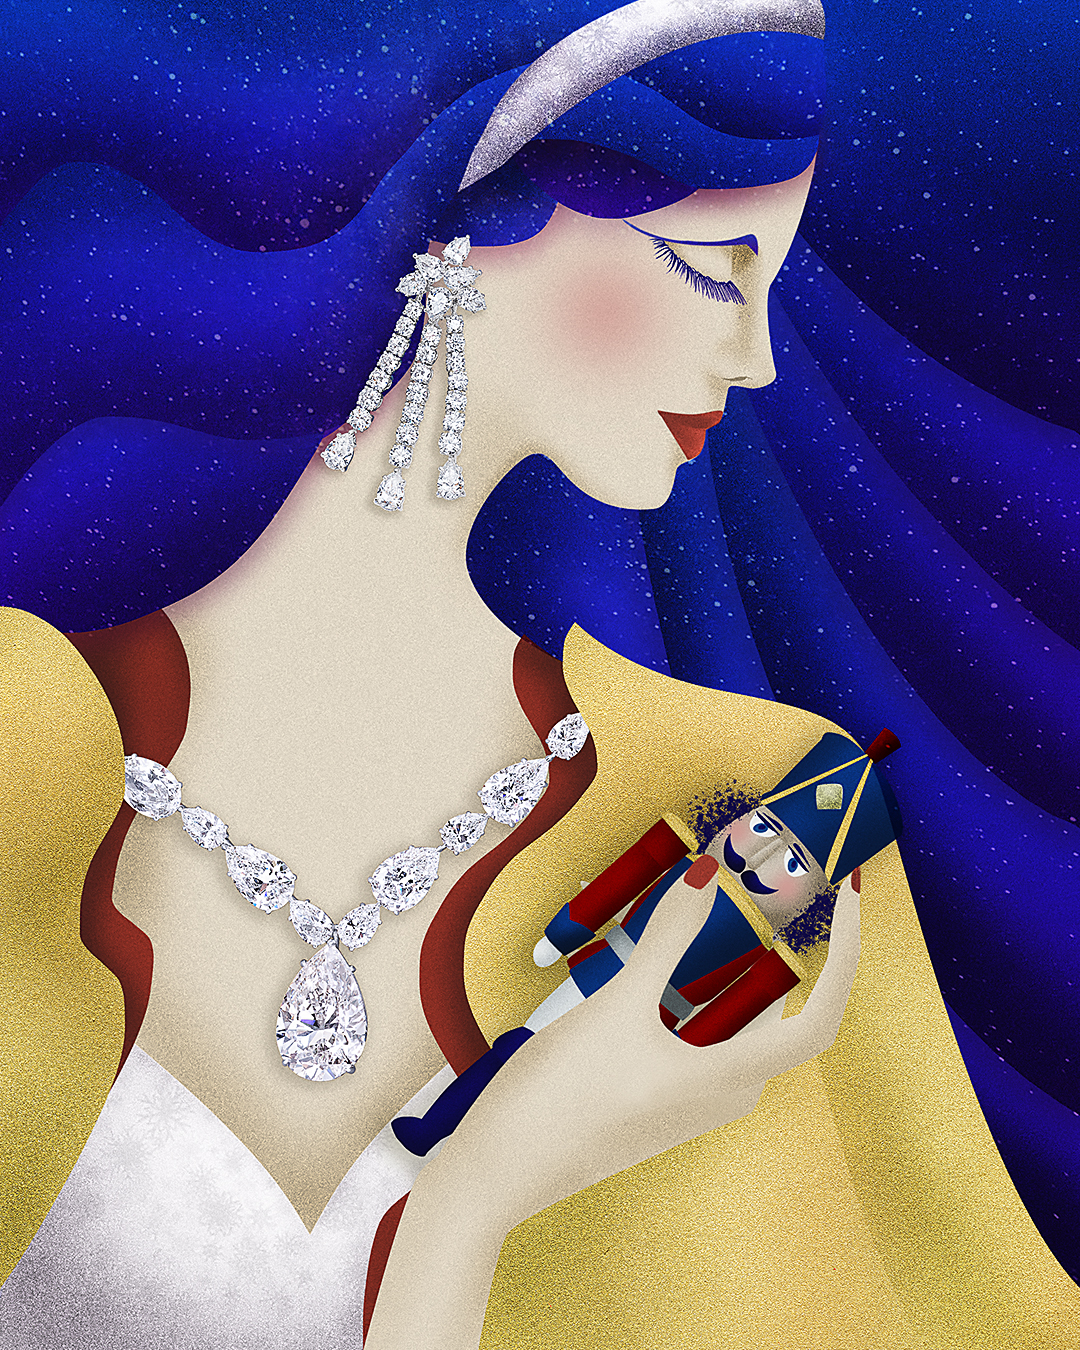 celia fabbri photography illustration chatila christmas high jewellery diamonds parrure